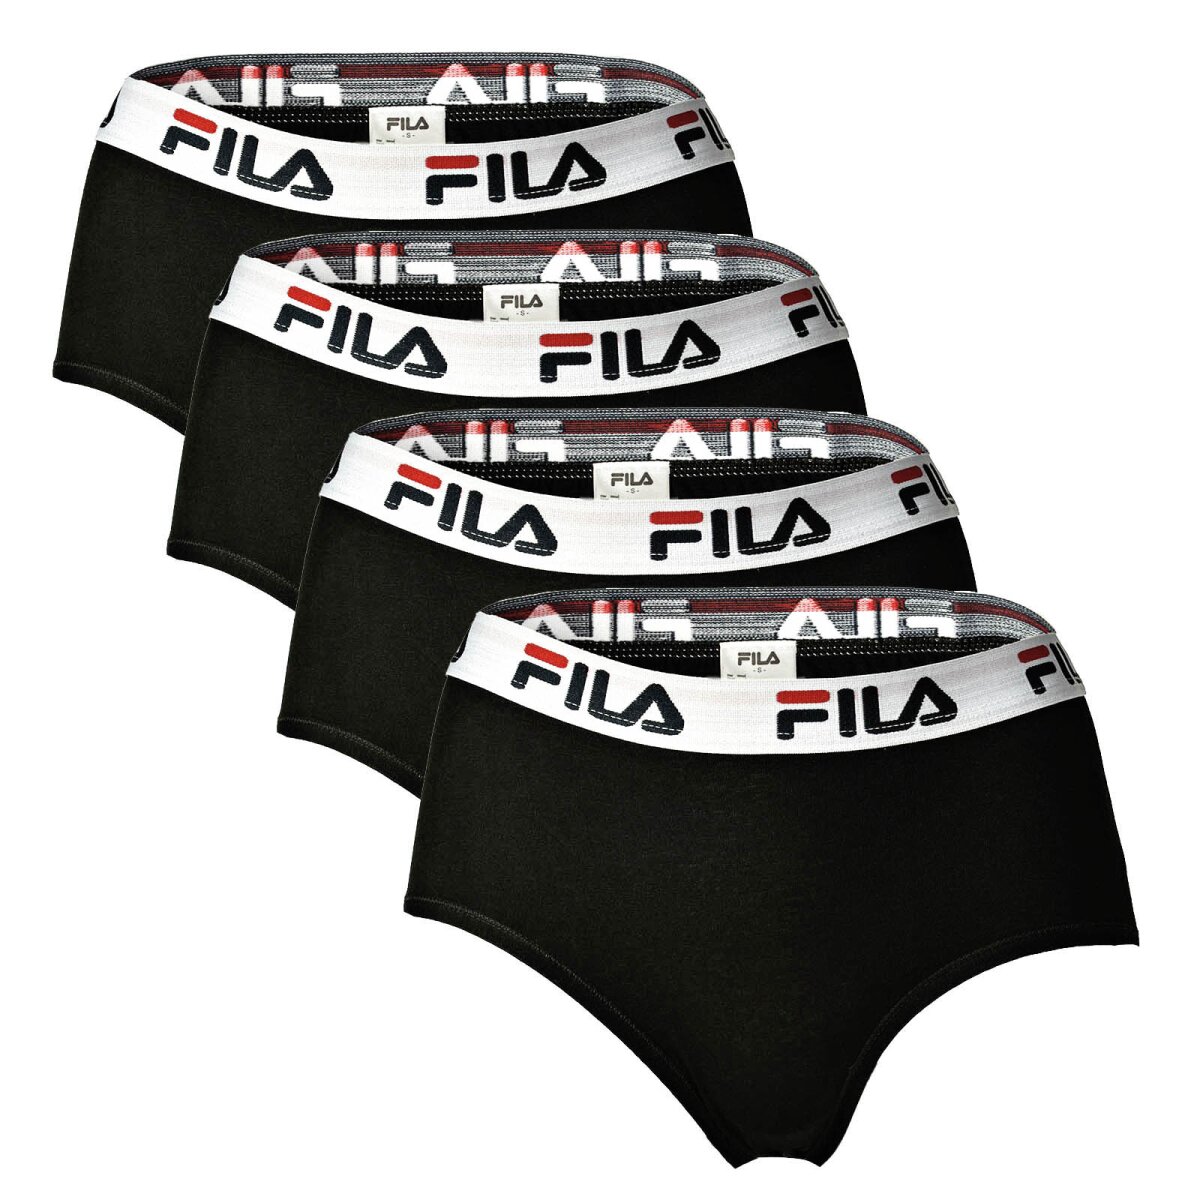 FILA sportliche Pants für Damen - 4er Pack, 29,95 €